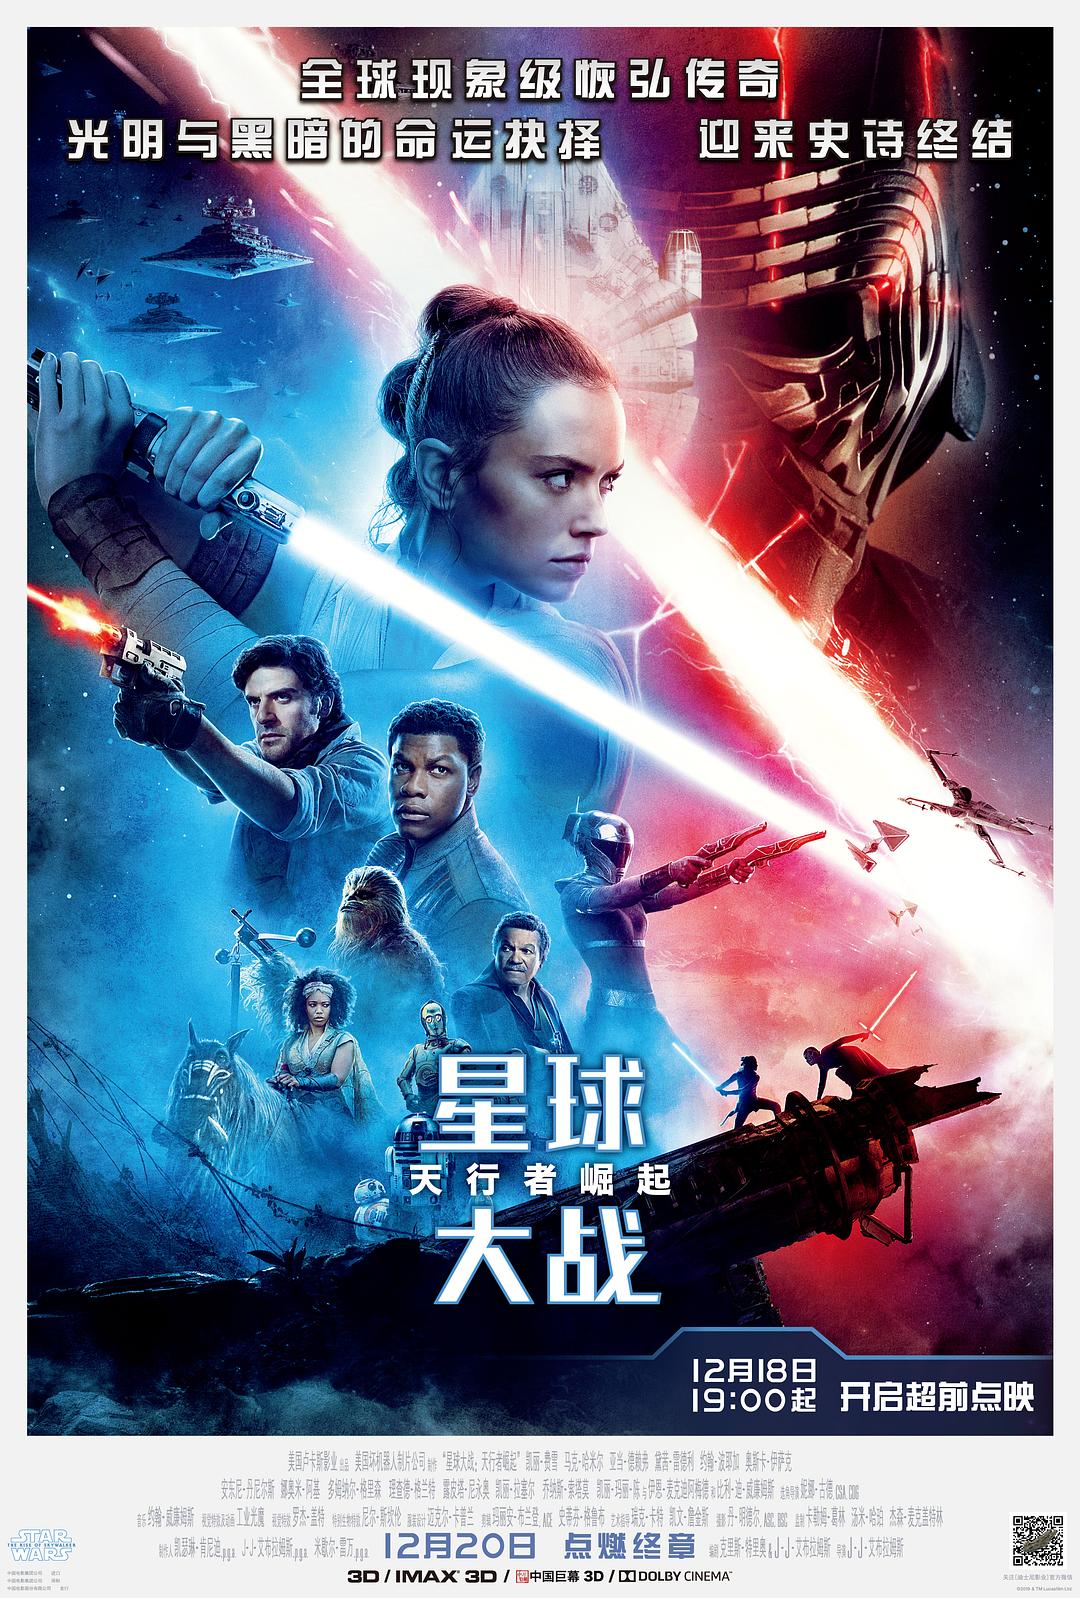 星球大战9:天行者突起 Star.Wars.Episode.IX.The.Rise.of.Skywalker.2019.1080p.3D.BluRay.Half-SBS.x264.DTS-HD.MA.7.1-FGT 21.45GB-1.png